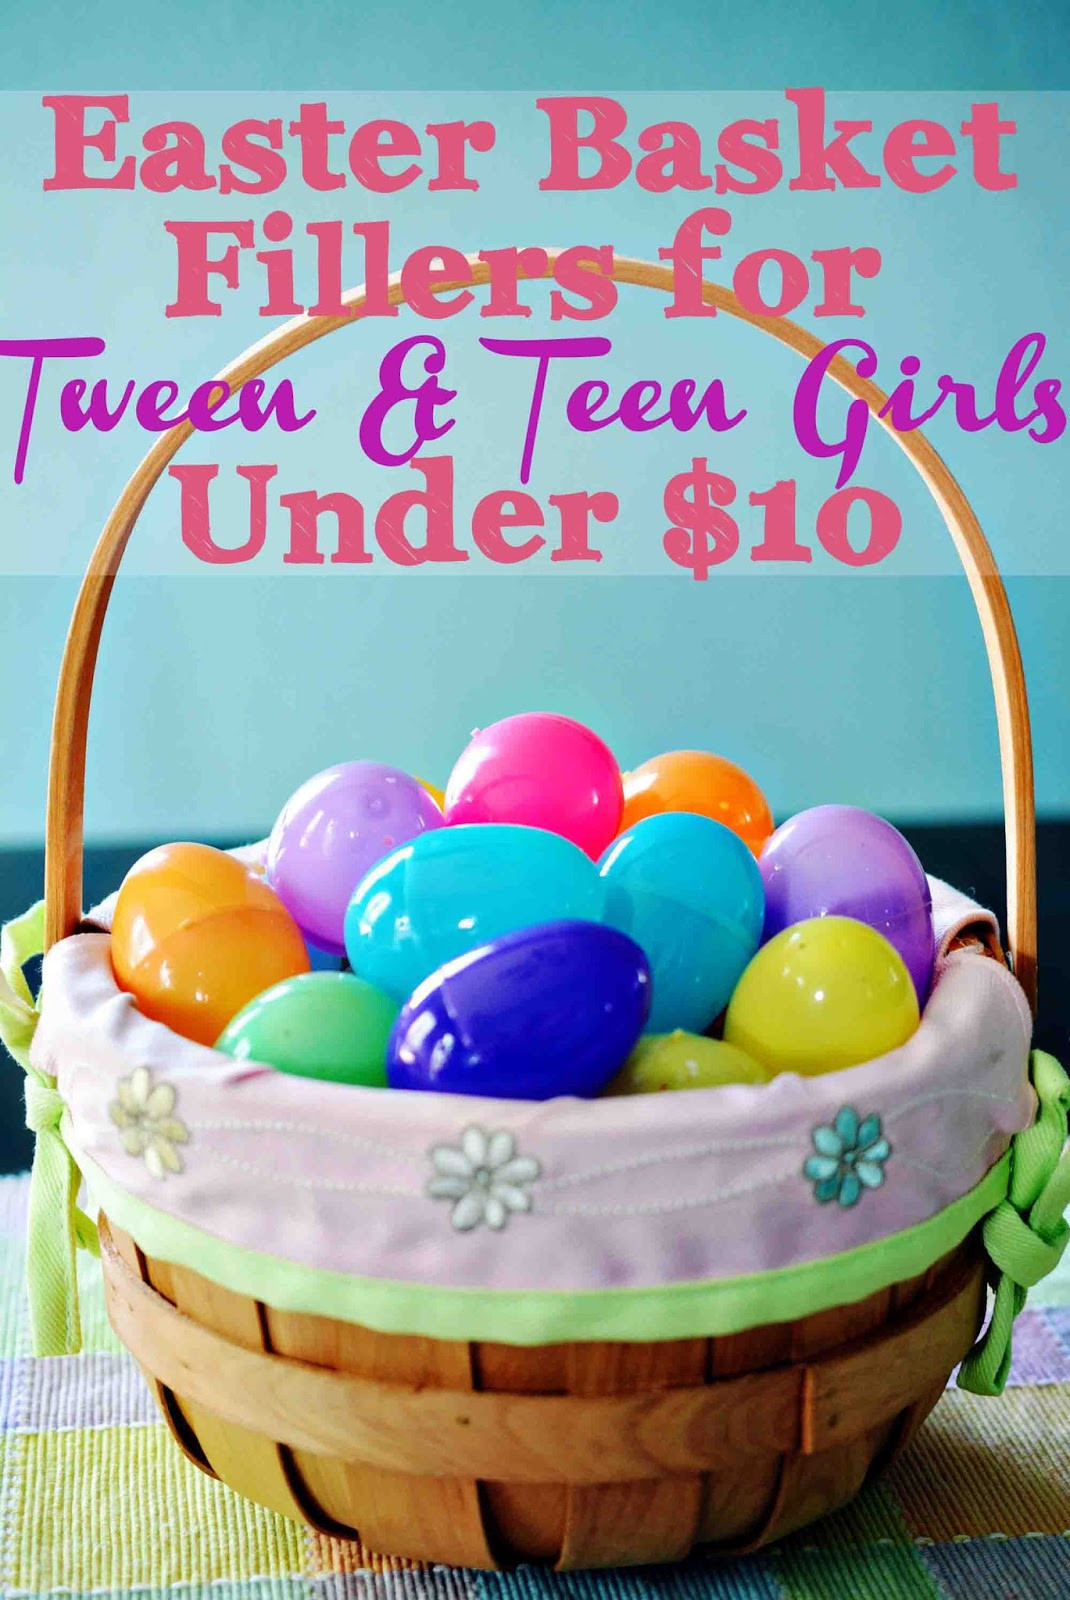 Easter Basket Ideas For Teenage Girl
 Theresa s Mixed Nuts Tween & Teen Girl Easter Basket